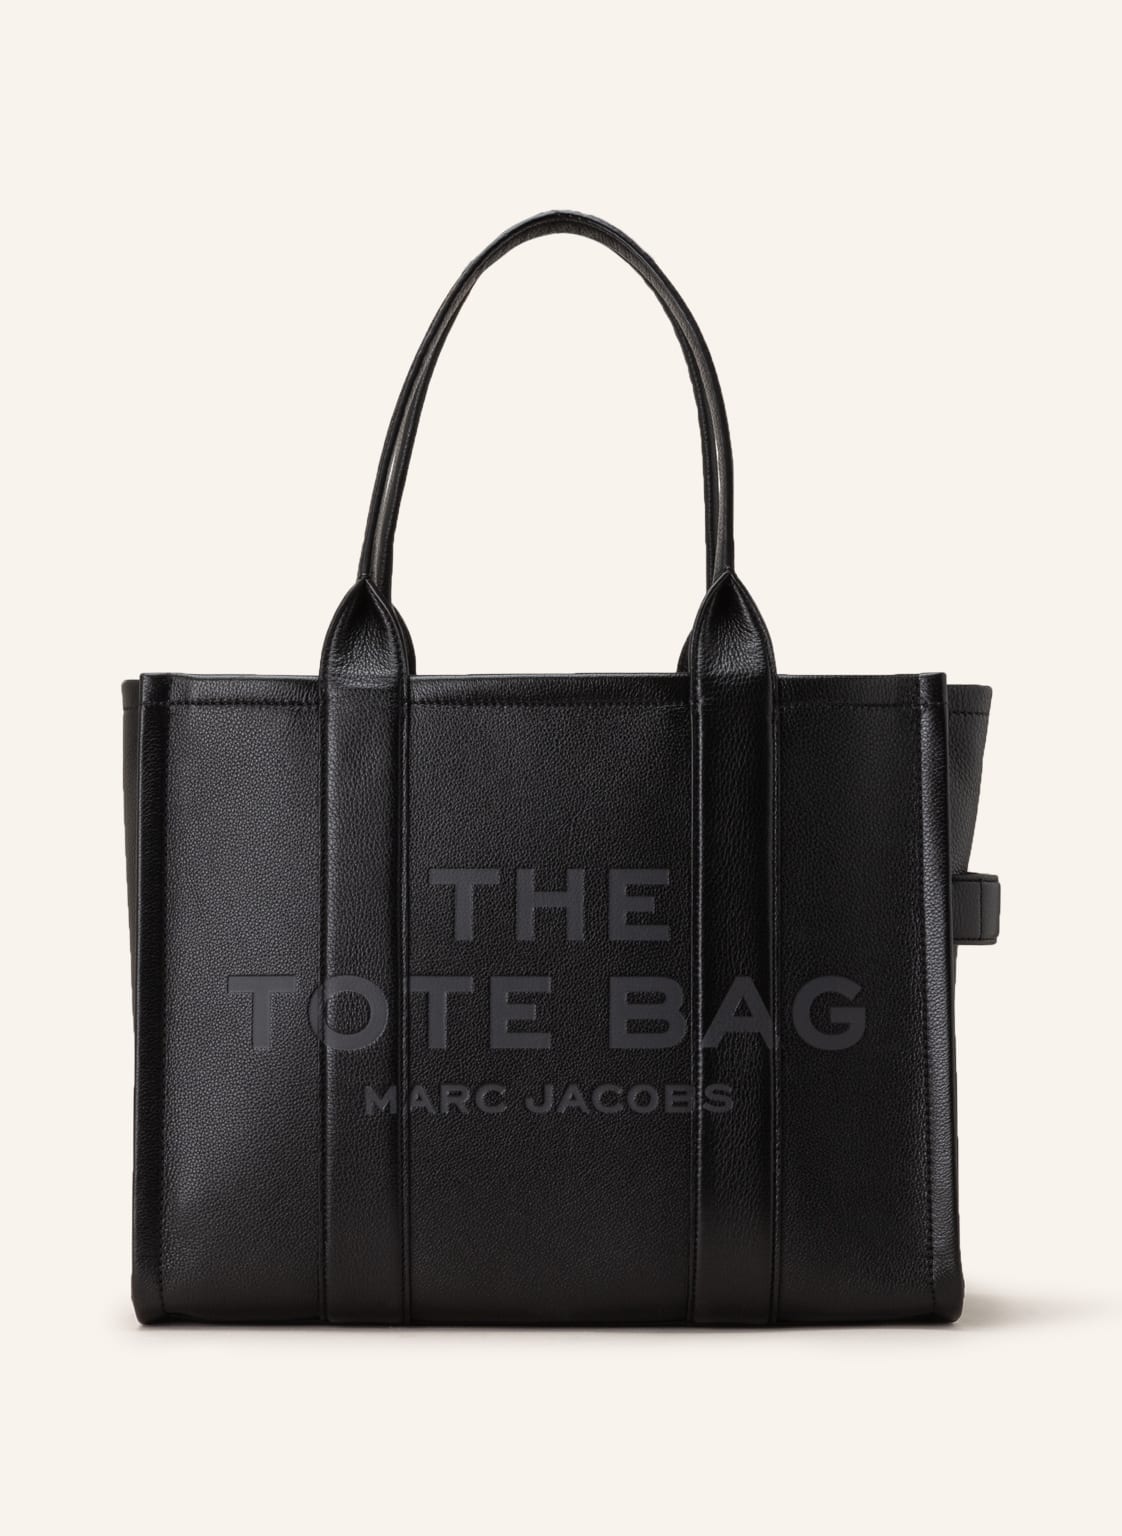 Zdjęcia - Torebka damska Marc Jacobs Torba Shopper The Large Tote Bag Leather schwarz 